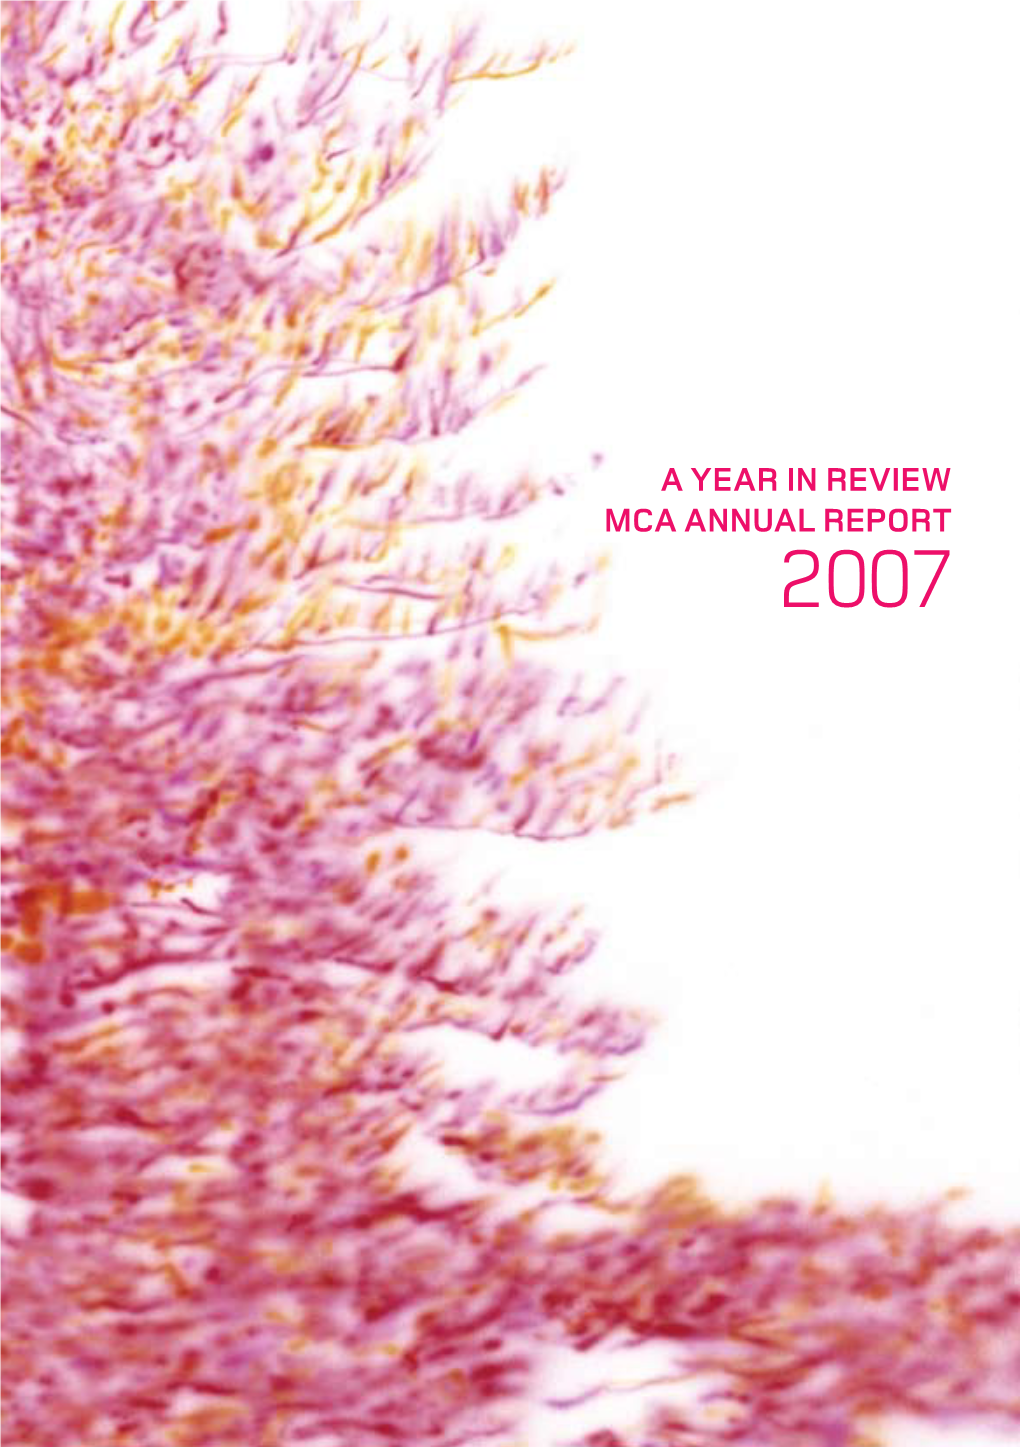 MCA Annual Report 2007 Download